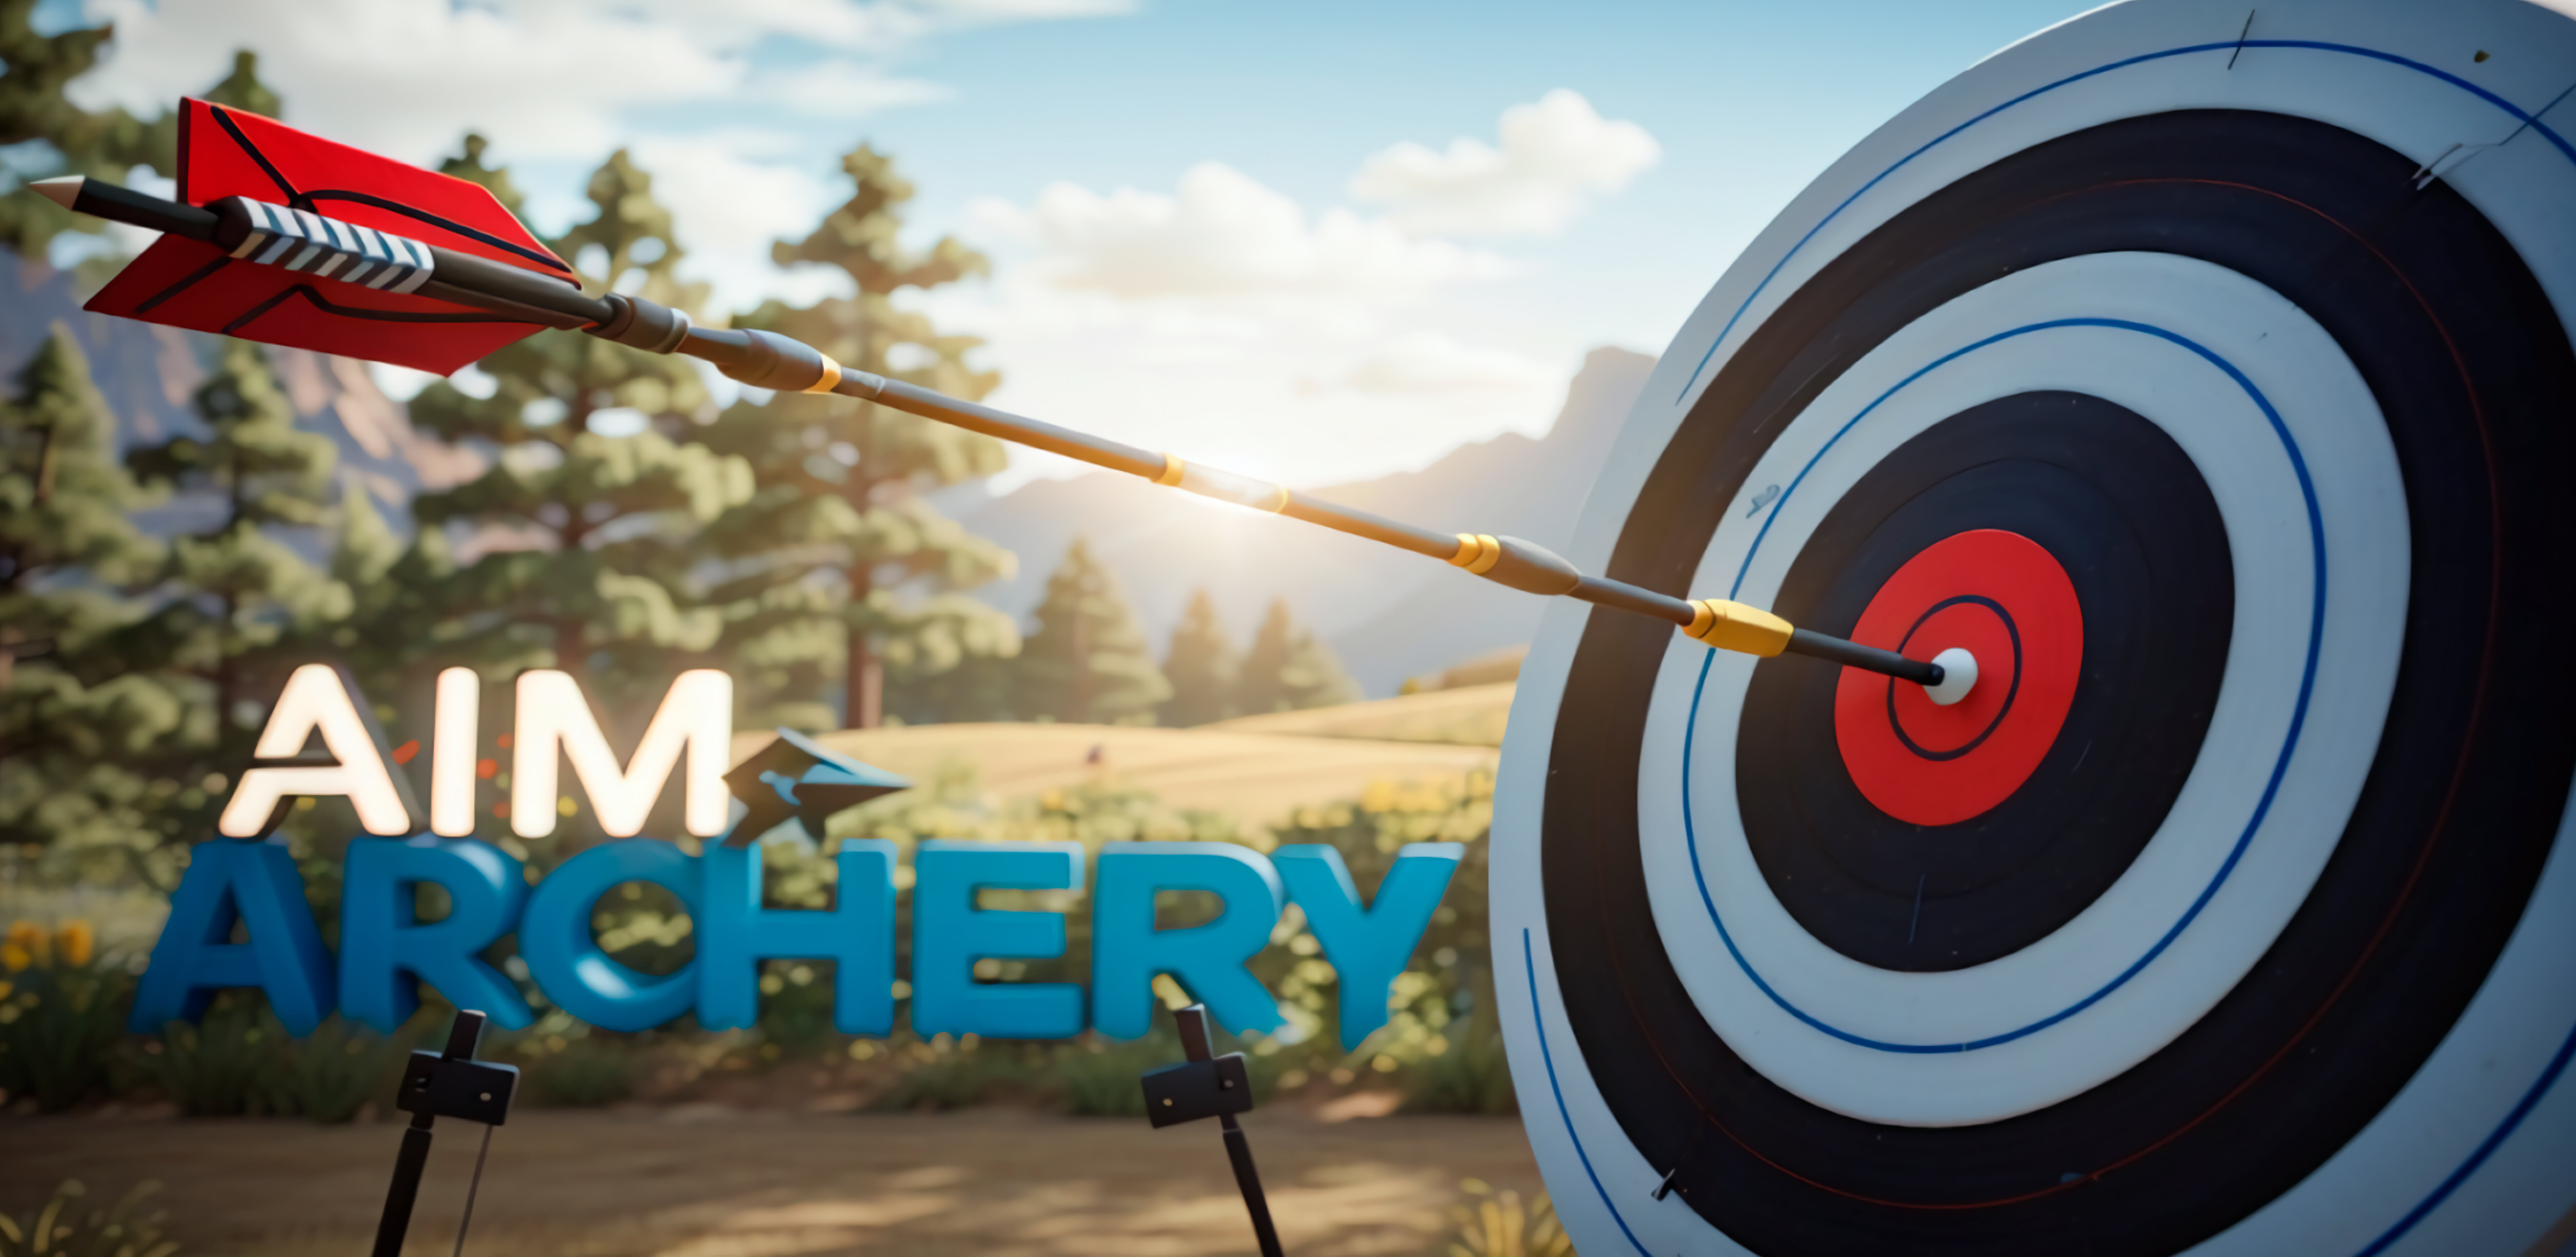 Aim Archery – Стрельба из лука